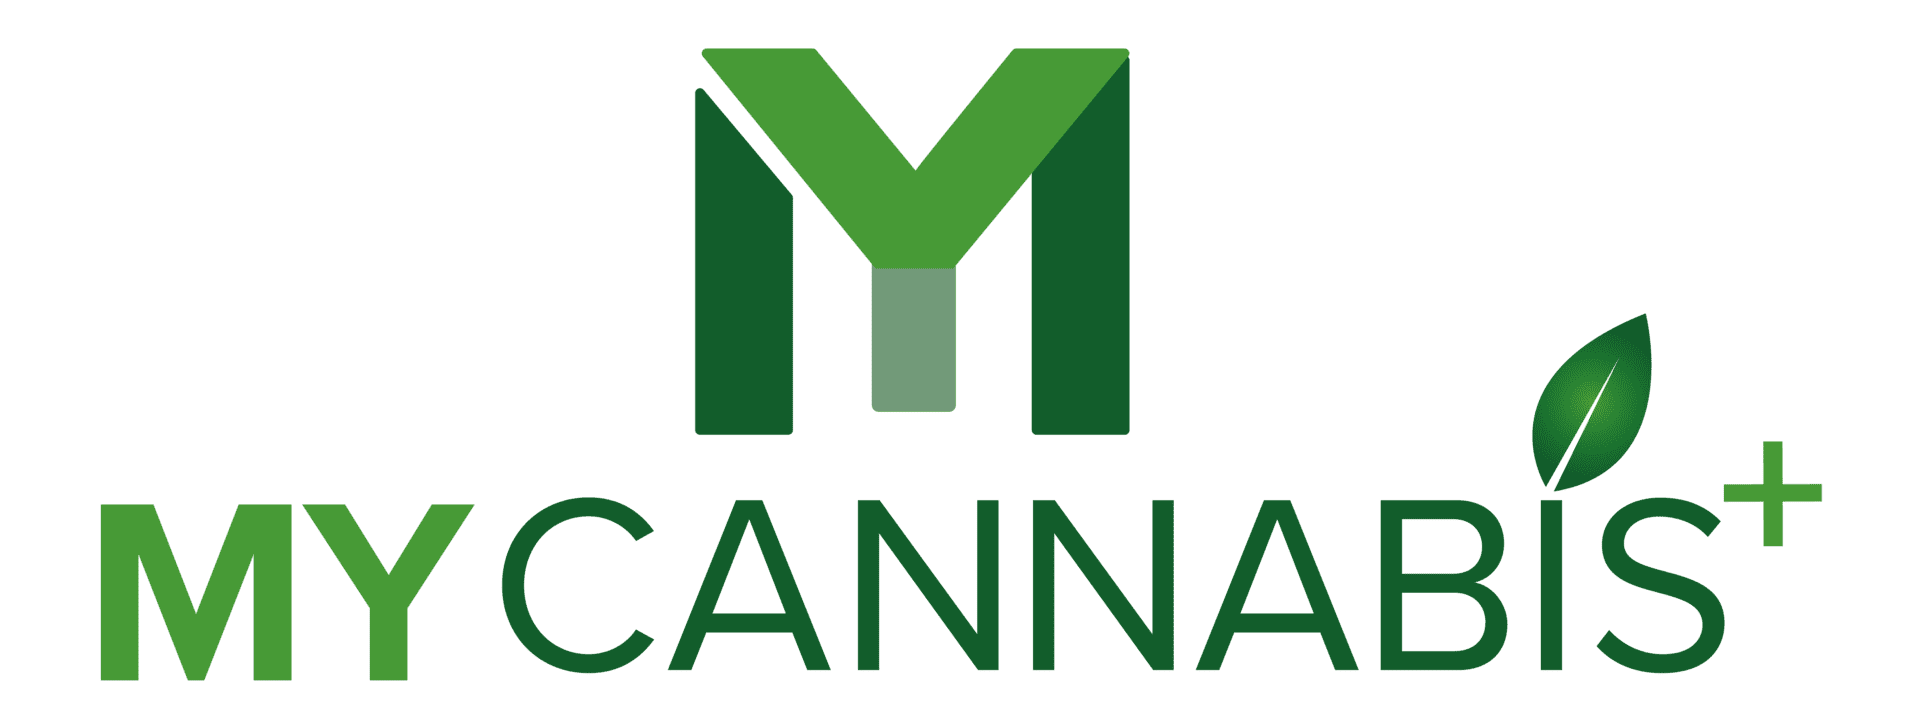 Cannabis Apotheke – Cannabis auf Rezept | Mycannabis.de